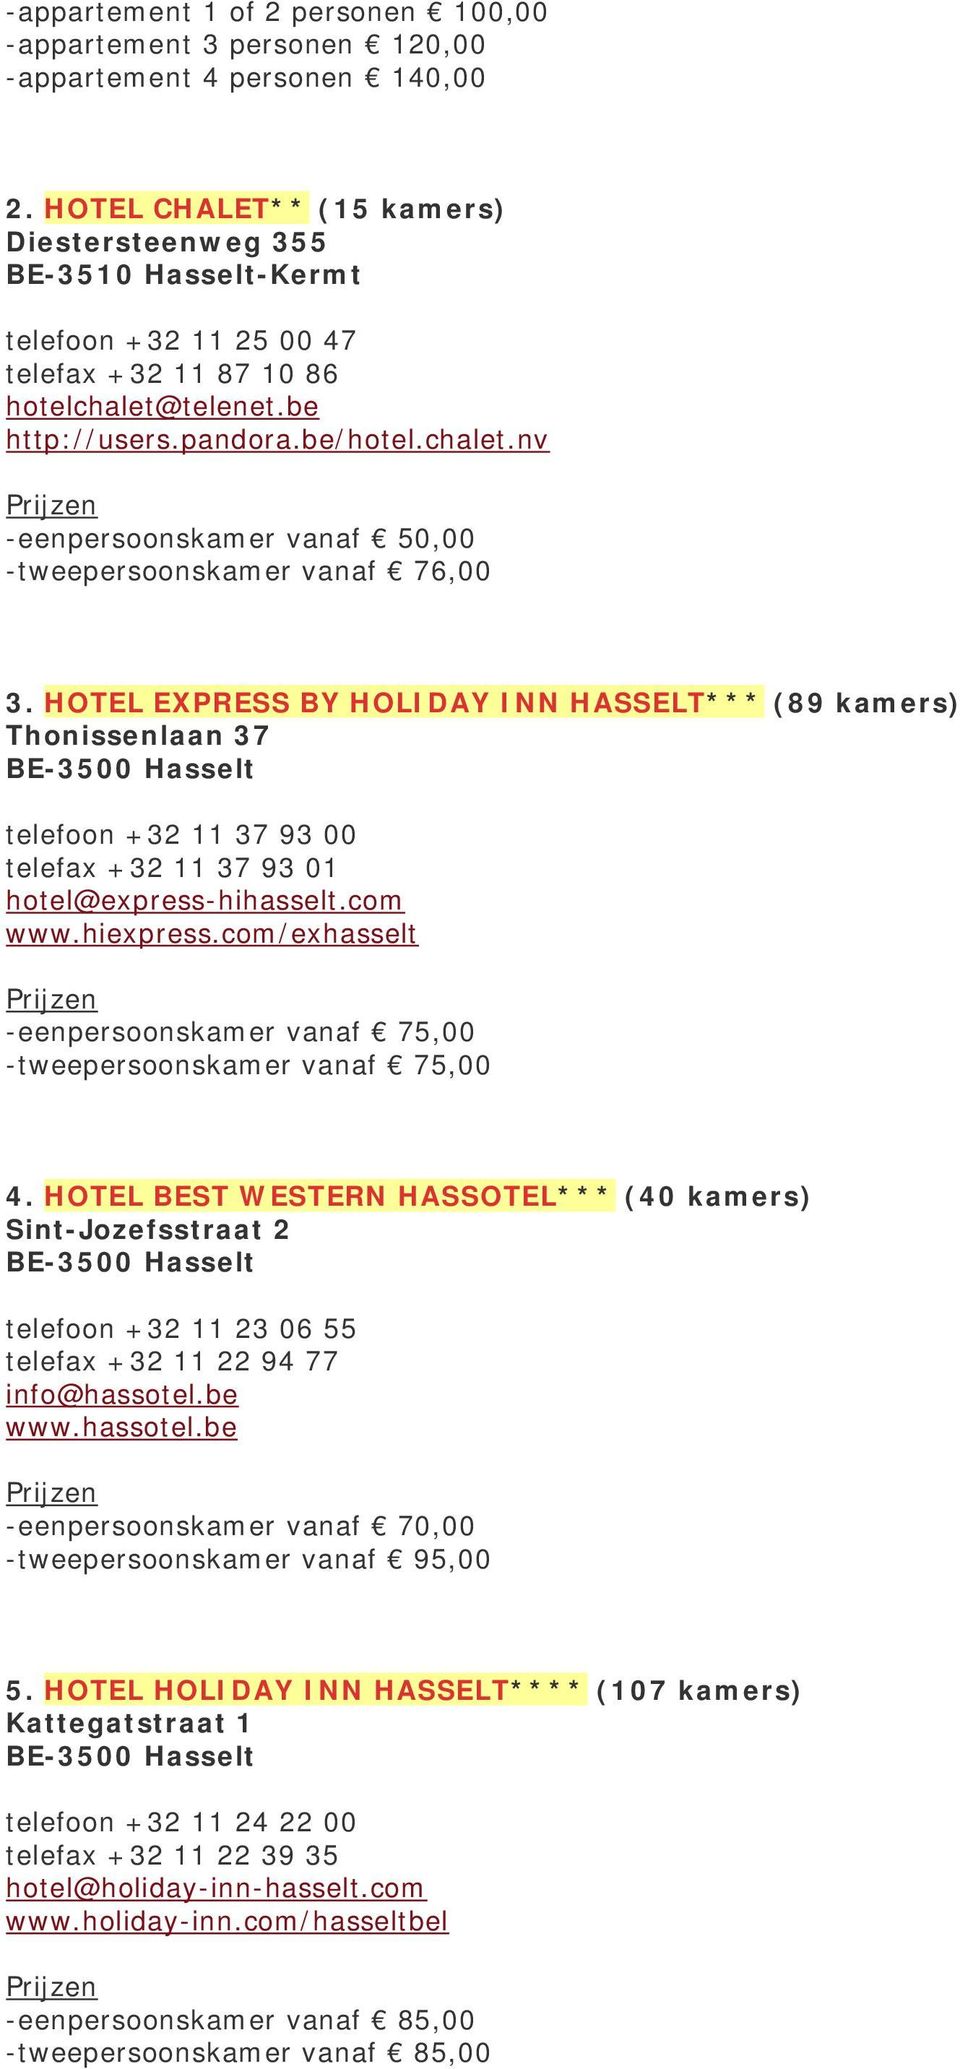 HOTEL EXPRESS BY HOLIDAY INN HASSELT*** (89 kamers) Thonissenlaan 37 telefoon +32 11 37 93 00 telefax +32 11 37 93 01 hotel@express-hihasselt.com www.hiexpress.